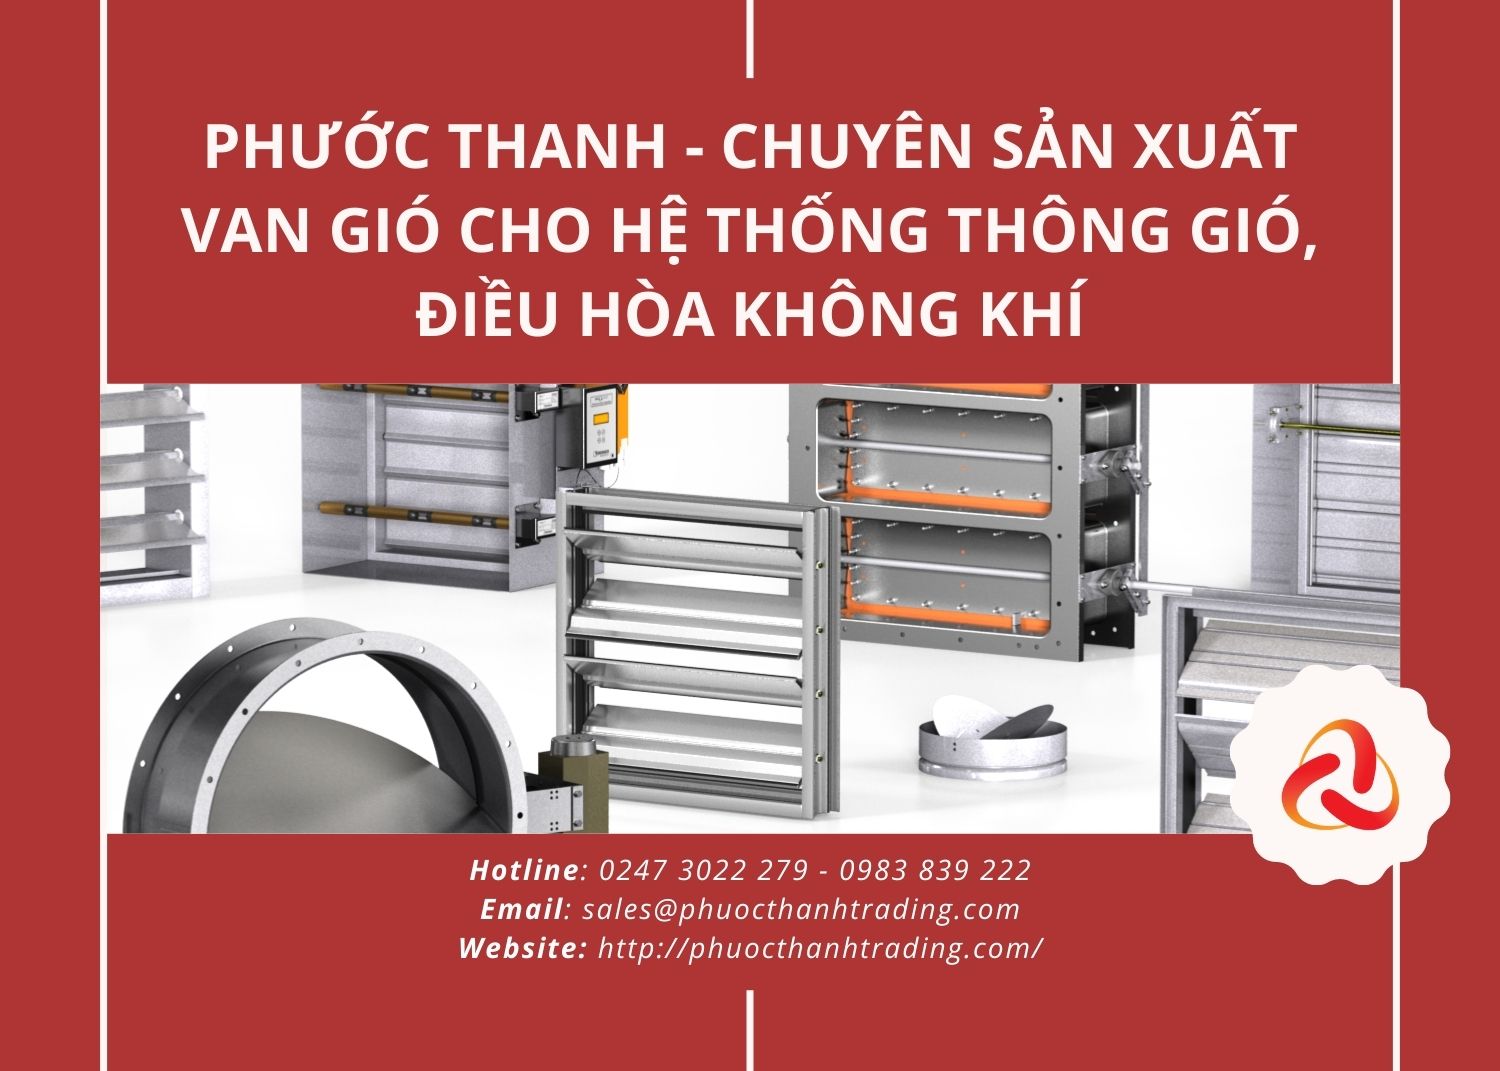 Chuyen-san-xuat-van-gio-gia-re-chat-luong-Phuoc-Thanh